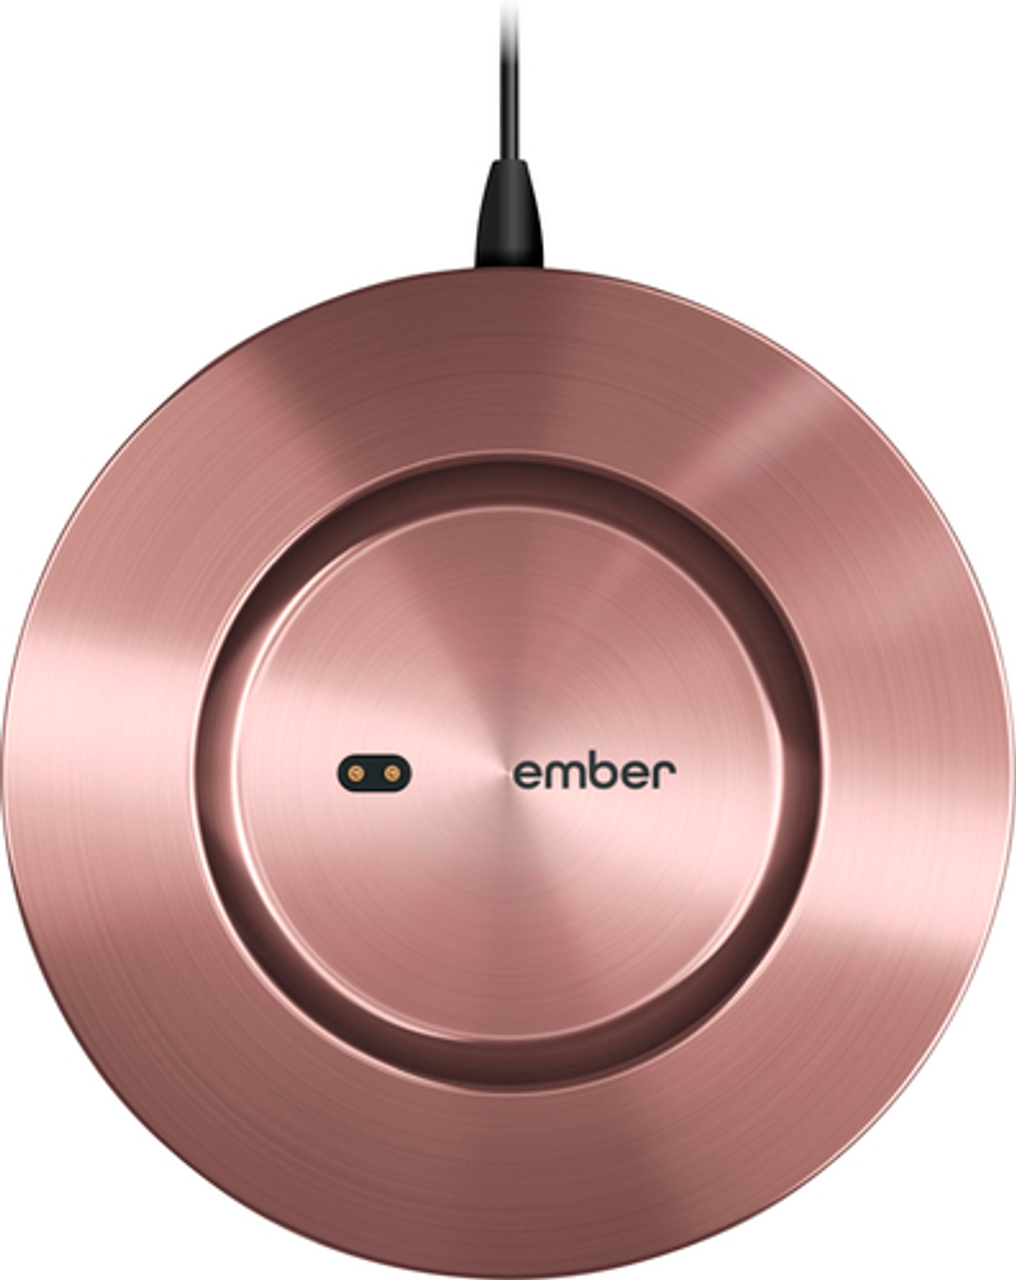 Ember - Mug² Charging Coaster - Rose Gold